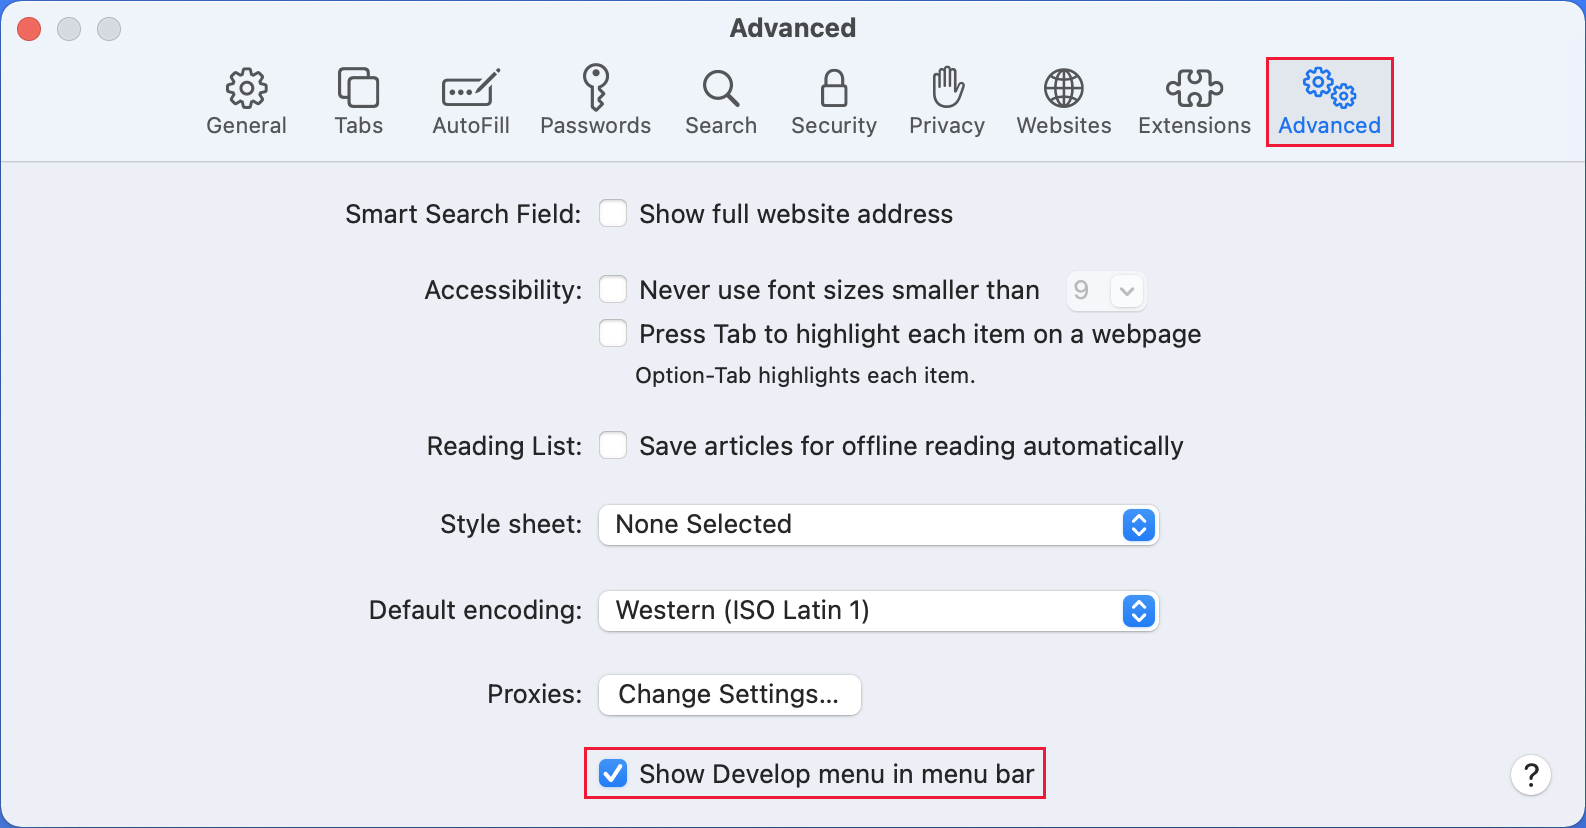 Screenshot of the Safari advanced menu with show develop menu in menu bar selected.